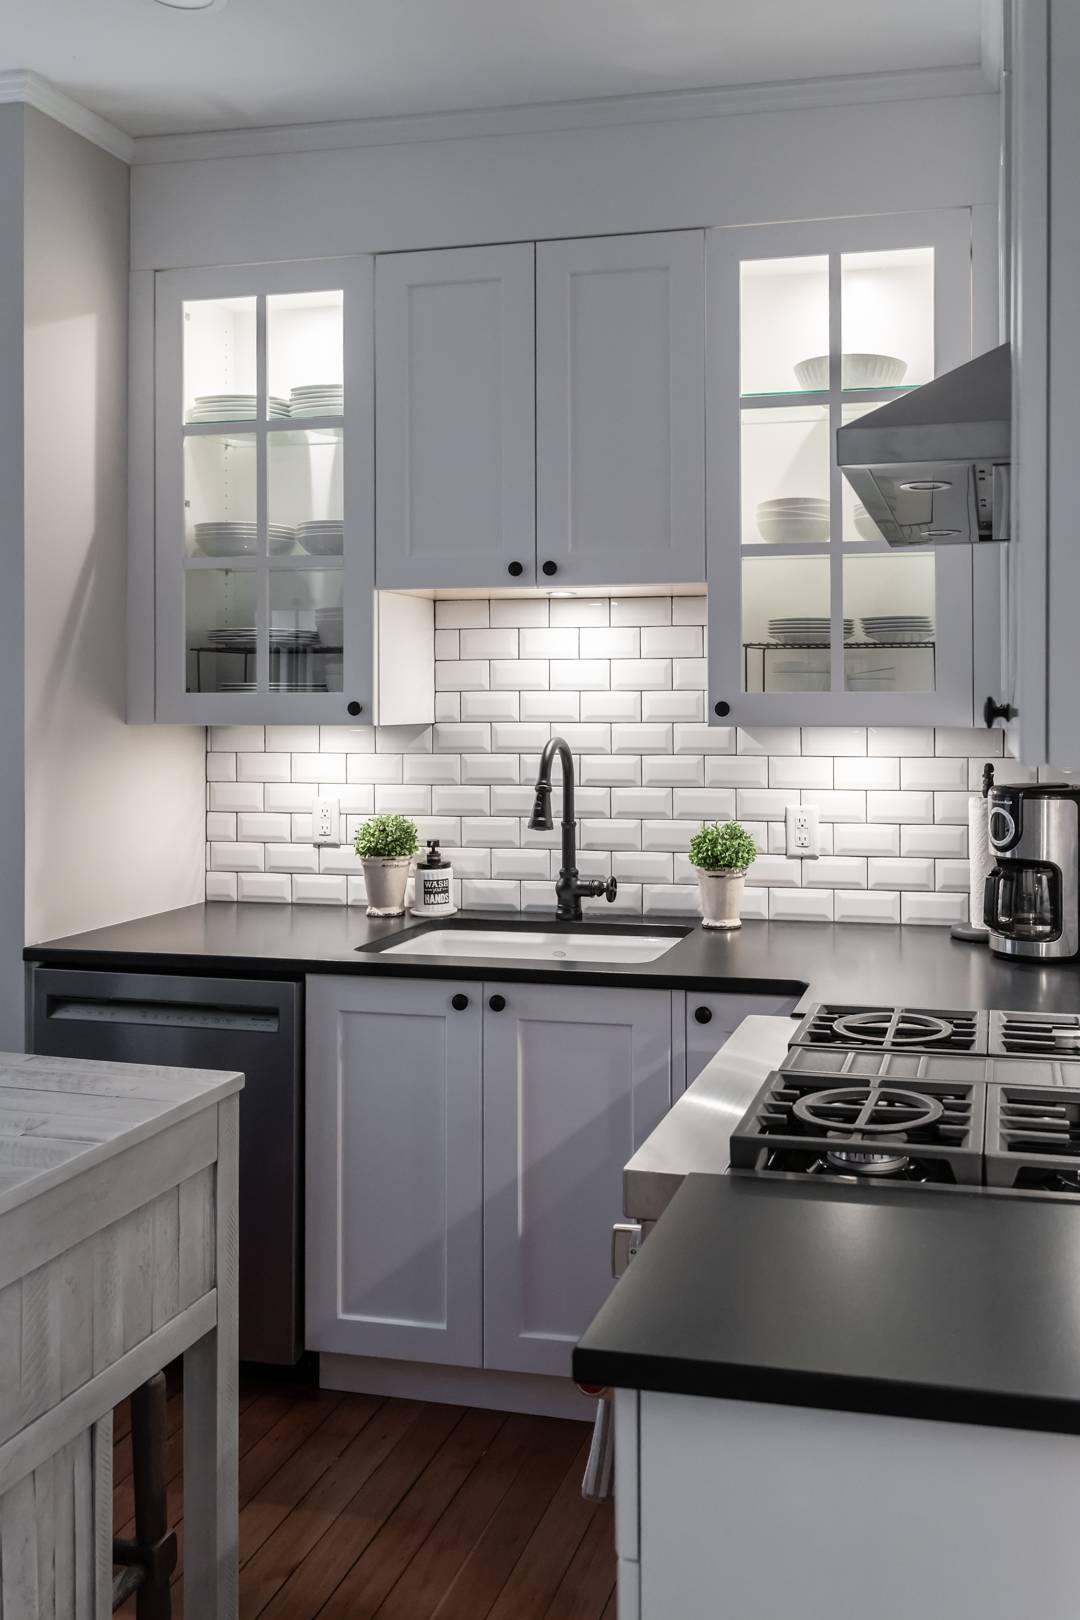 Modern kitchen with white tile backsplash and black hardware